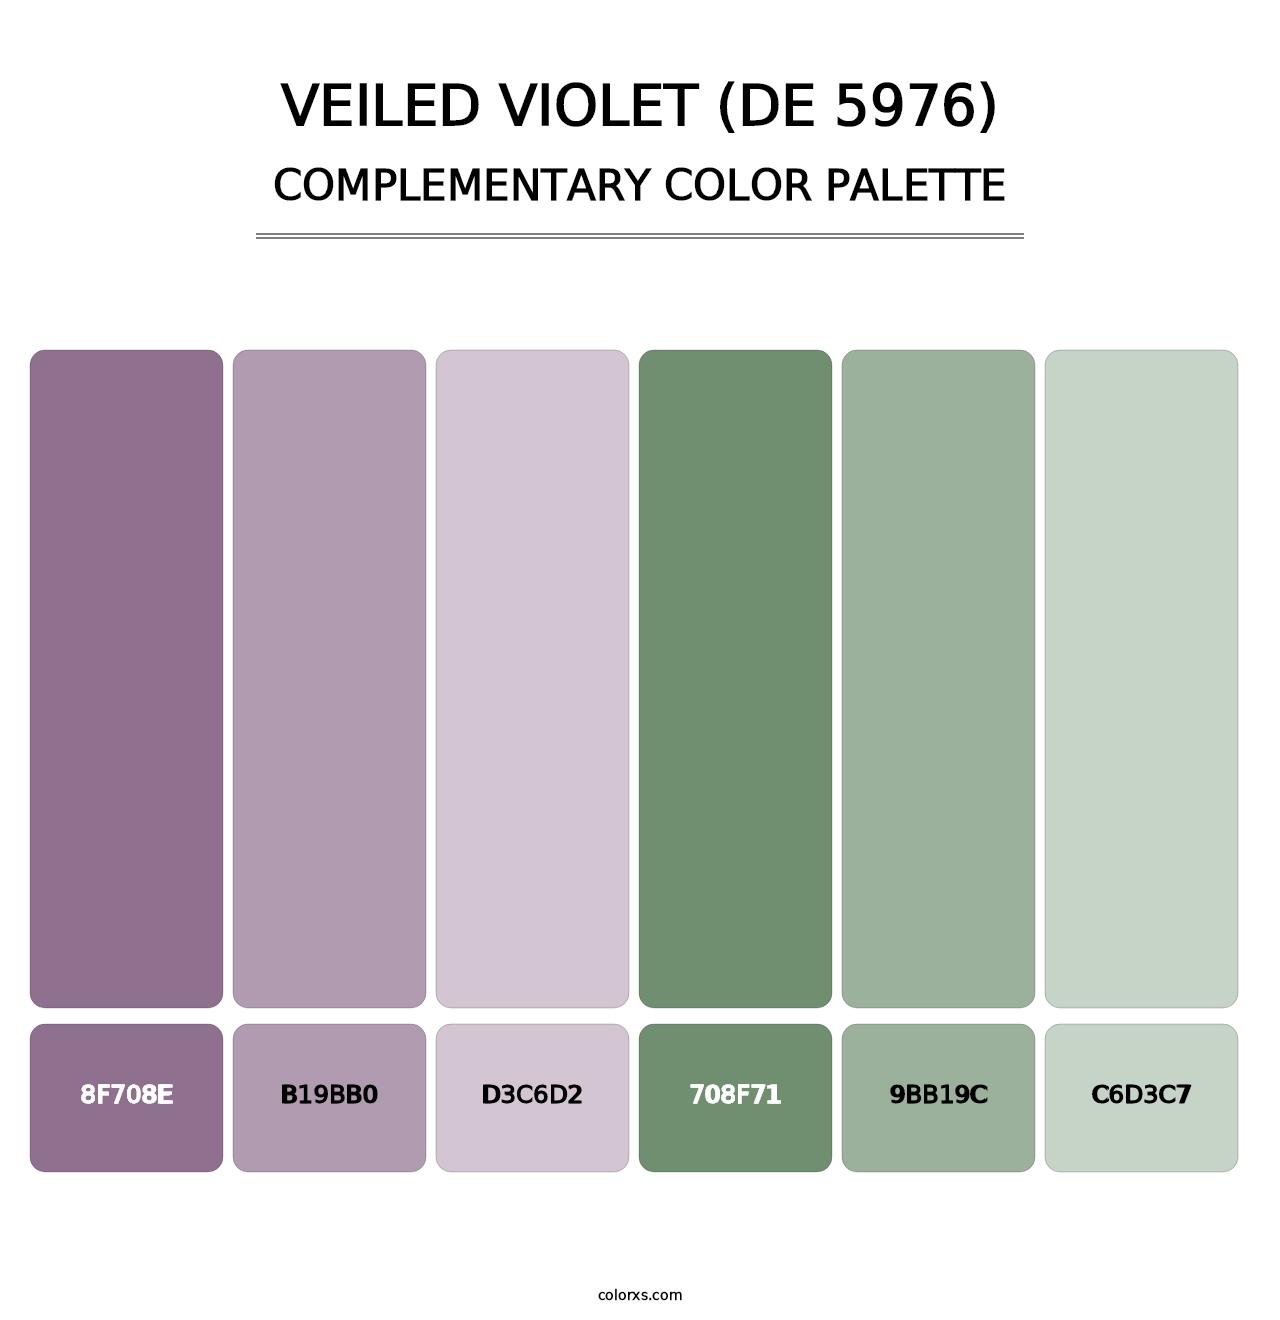 Veiled Violet (DE 5976) - Complementary Color Palette